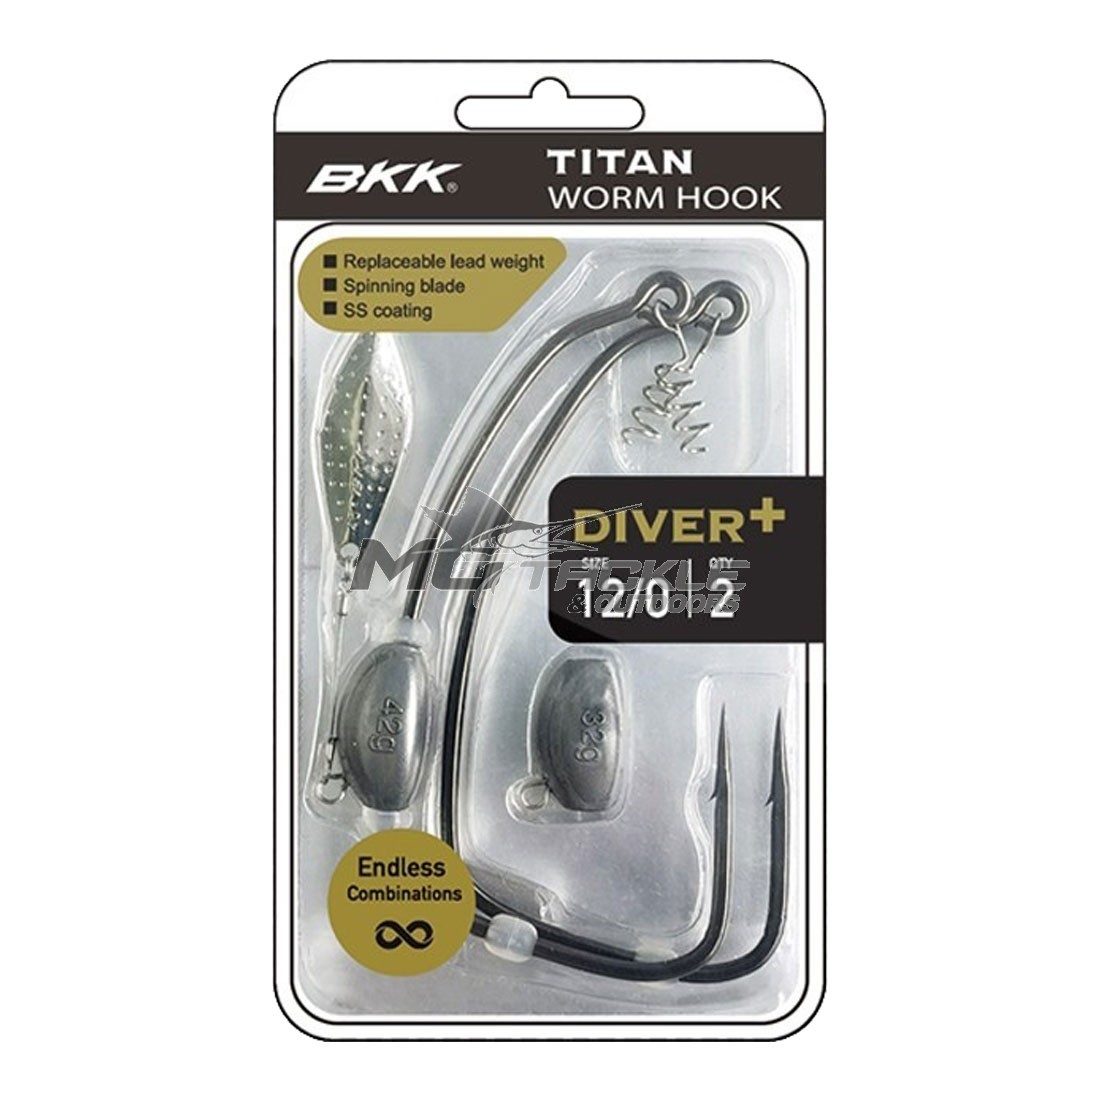 BKK Titan Diver Plus Worm Hook